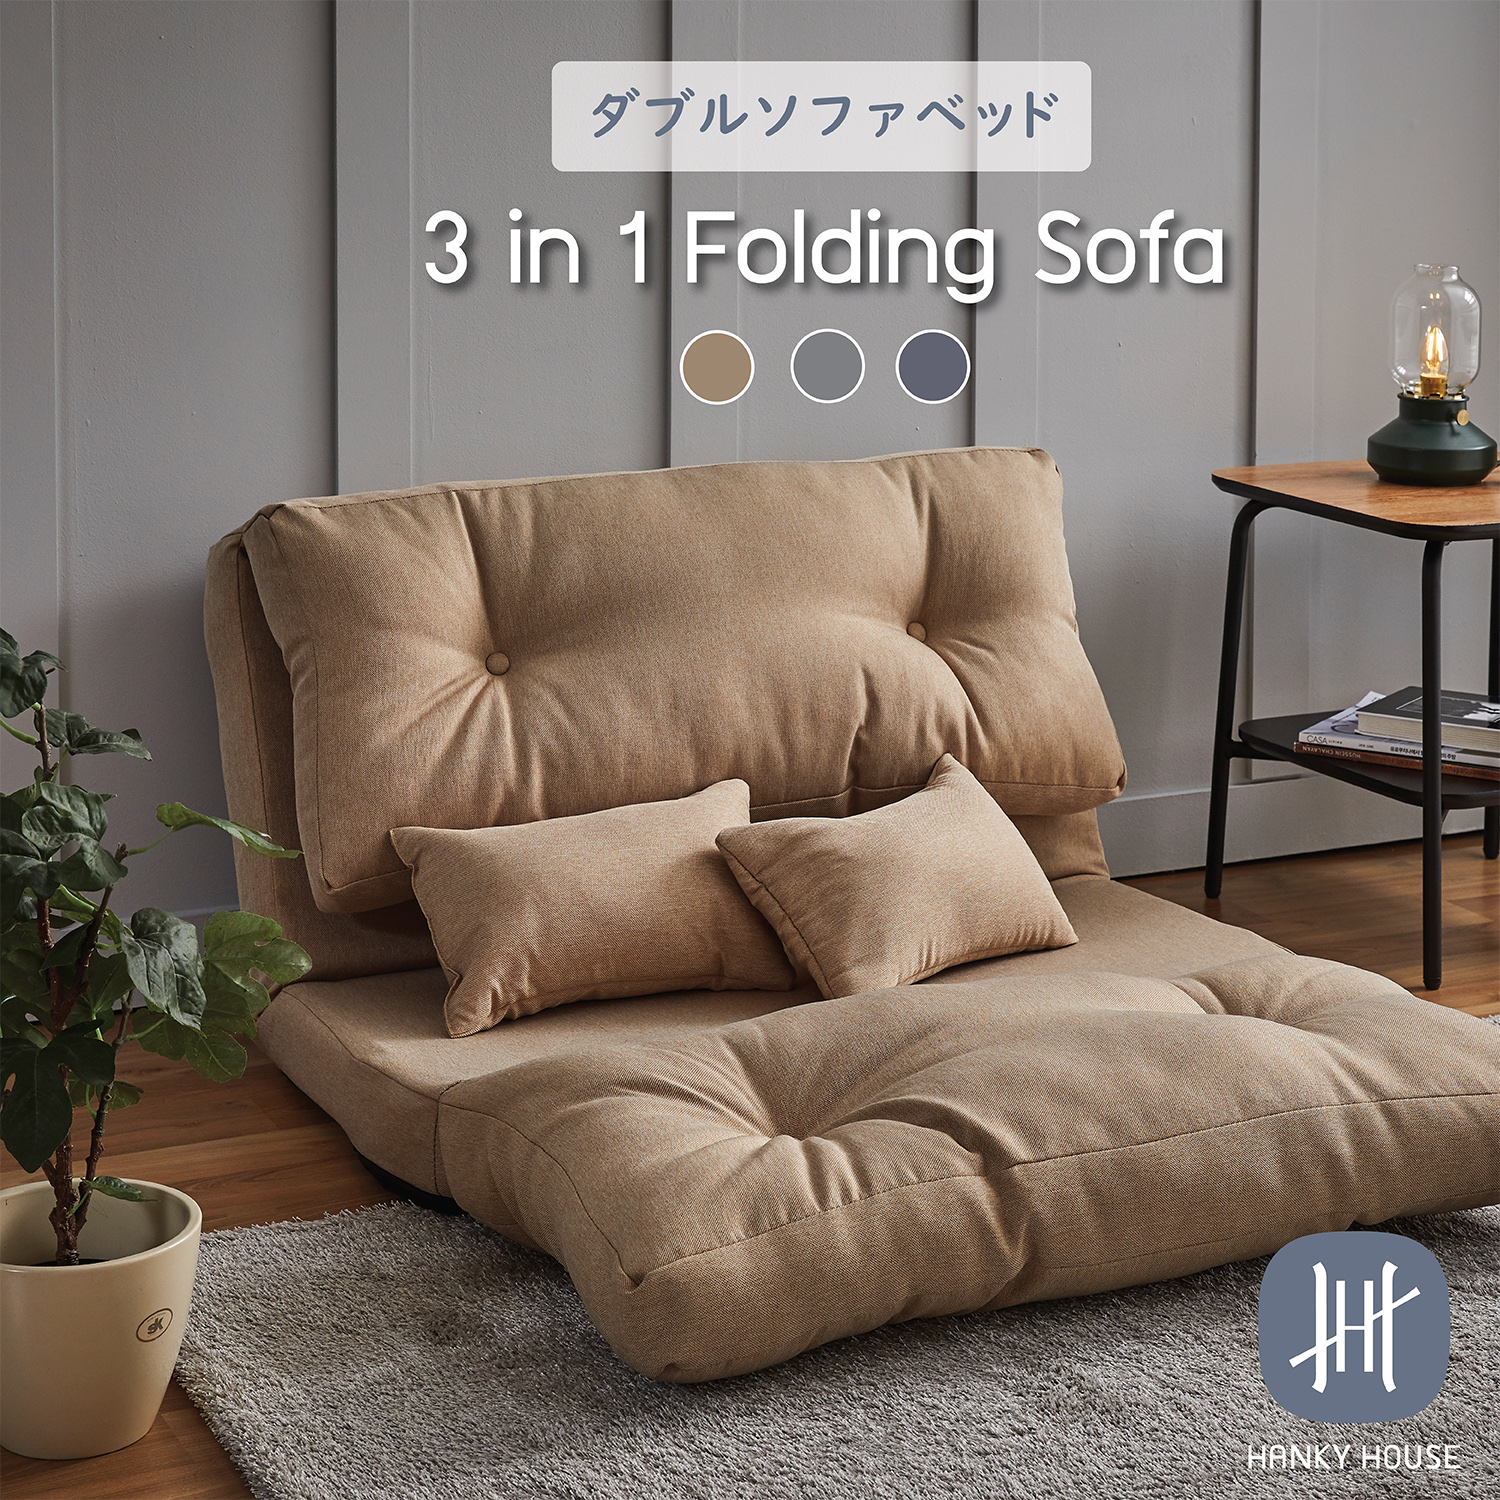 Hanky House โซฟาญี่ปุ่น เก้าอี้ญี่ปุ่น โซฟา 3in1 ปรับนอน ปรับนั่ง เอนได้ 15 ระดับ ฟรีหมอนอิง 2ใบ  Folding Sofa F_3in1sofa